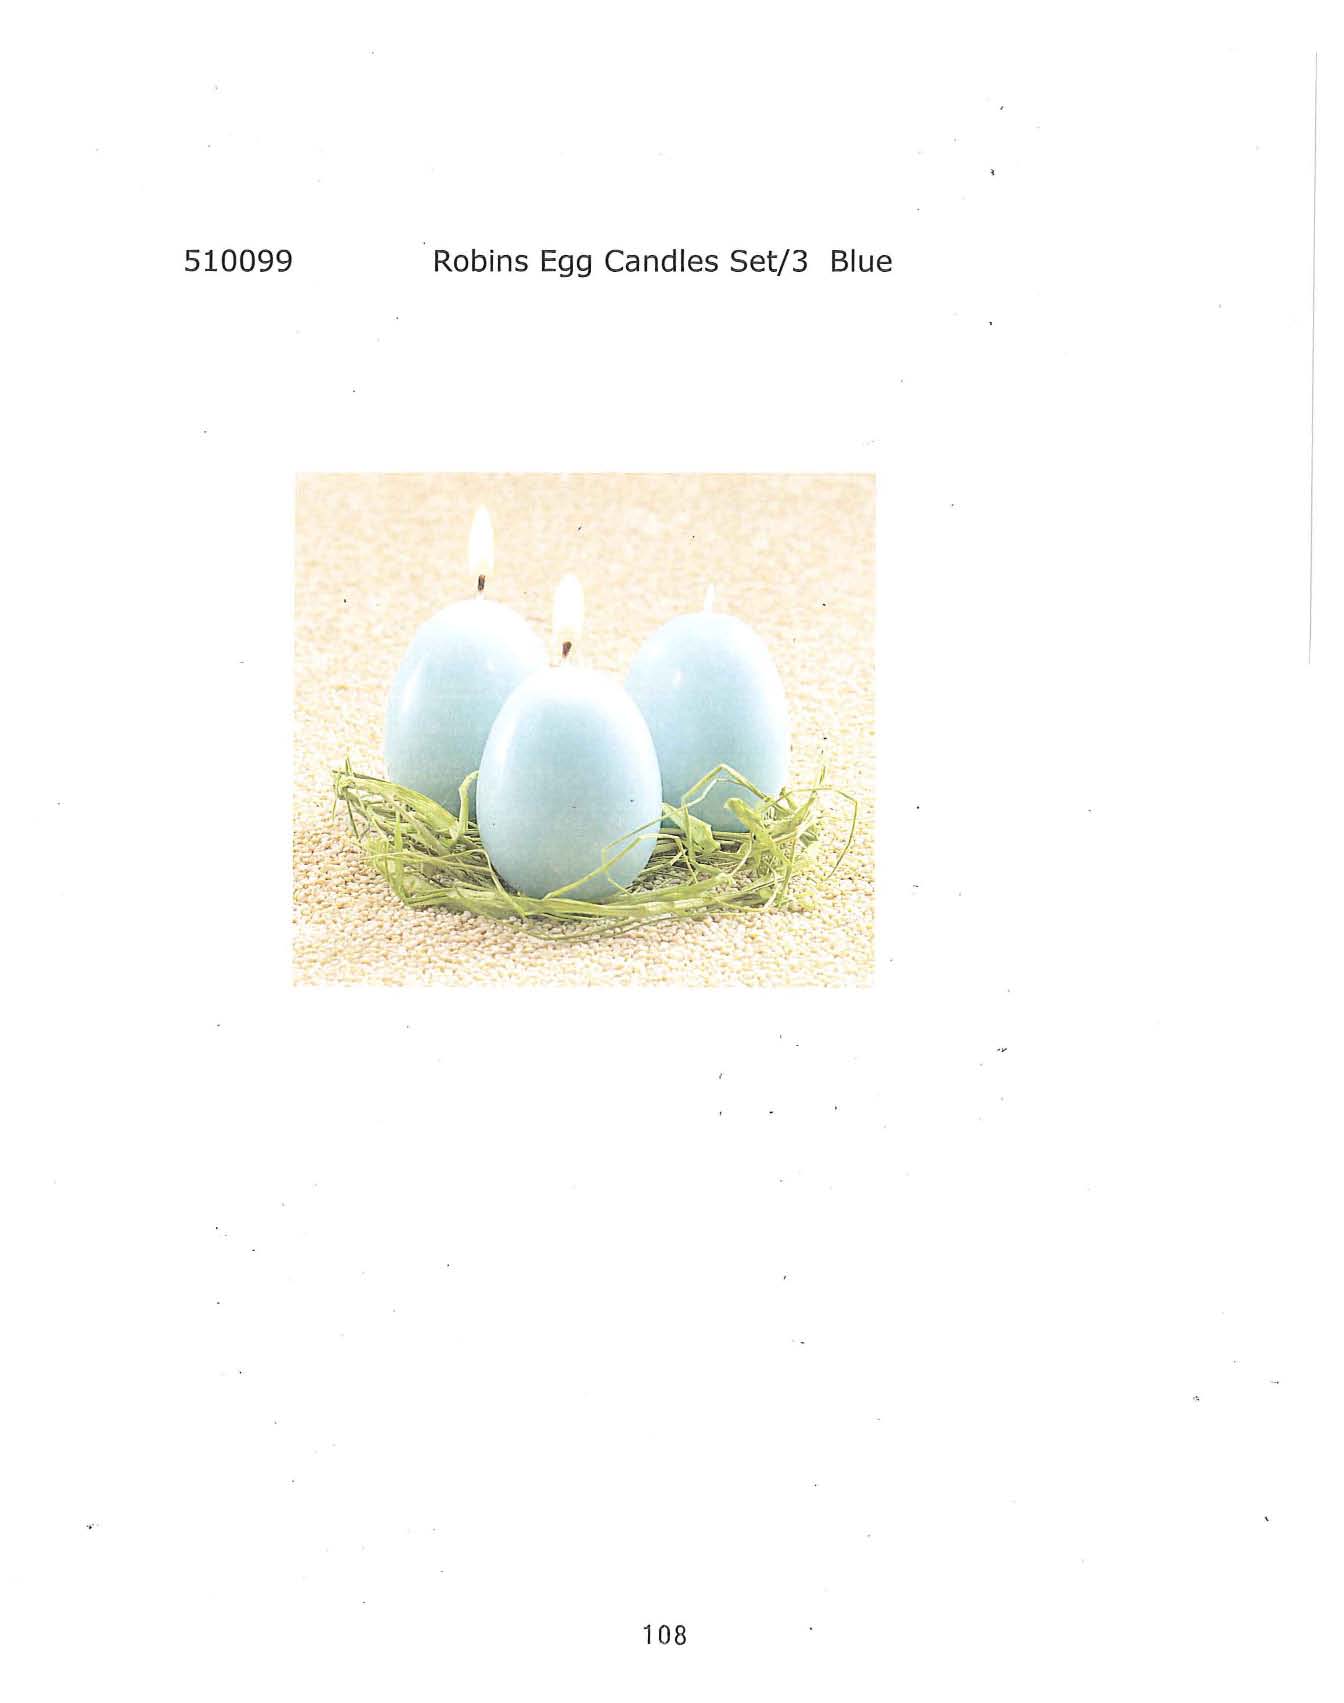 Robin's Egg Candle set/3 - Blue